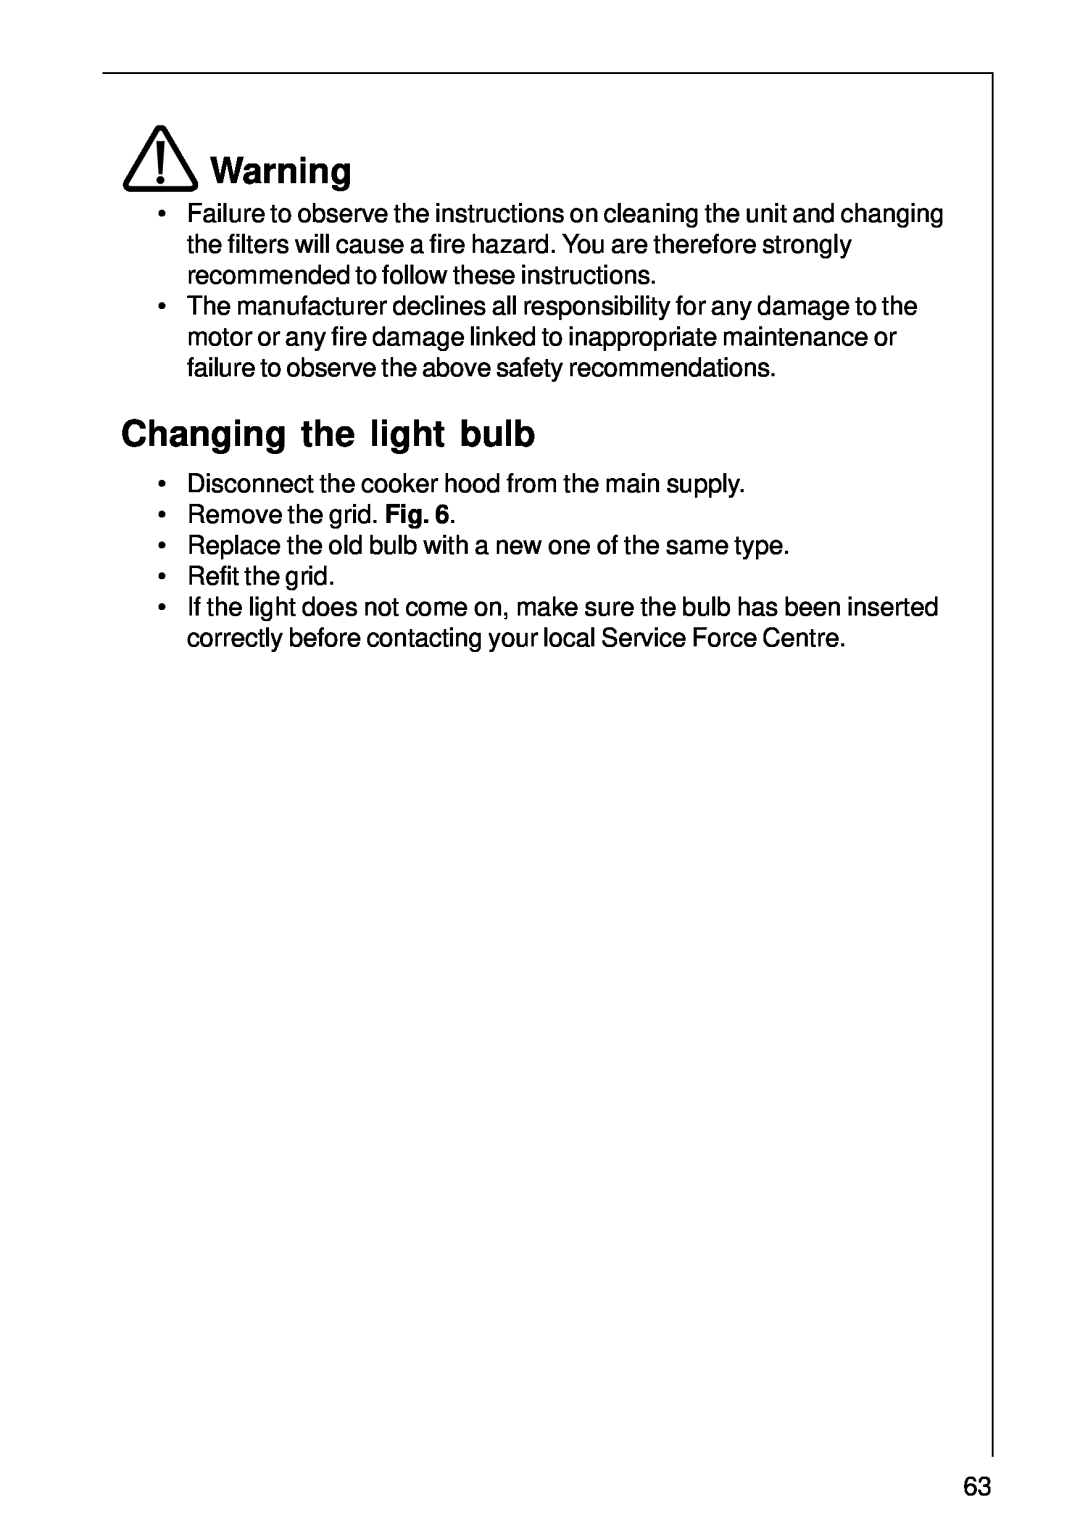 AEG DE 3160 installation instructions Changing the light bulb 